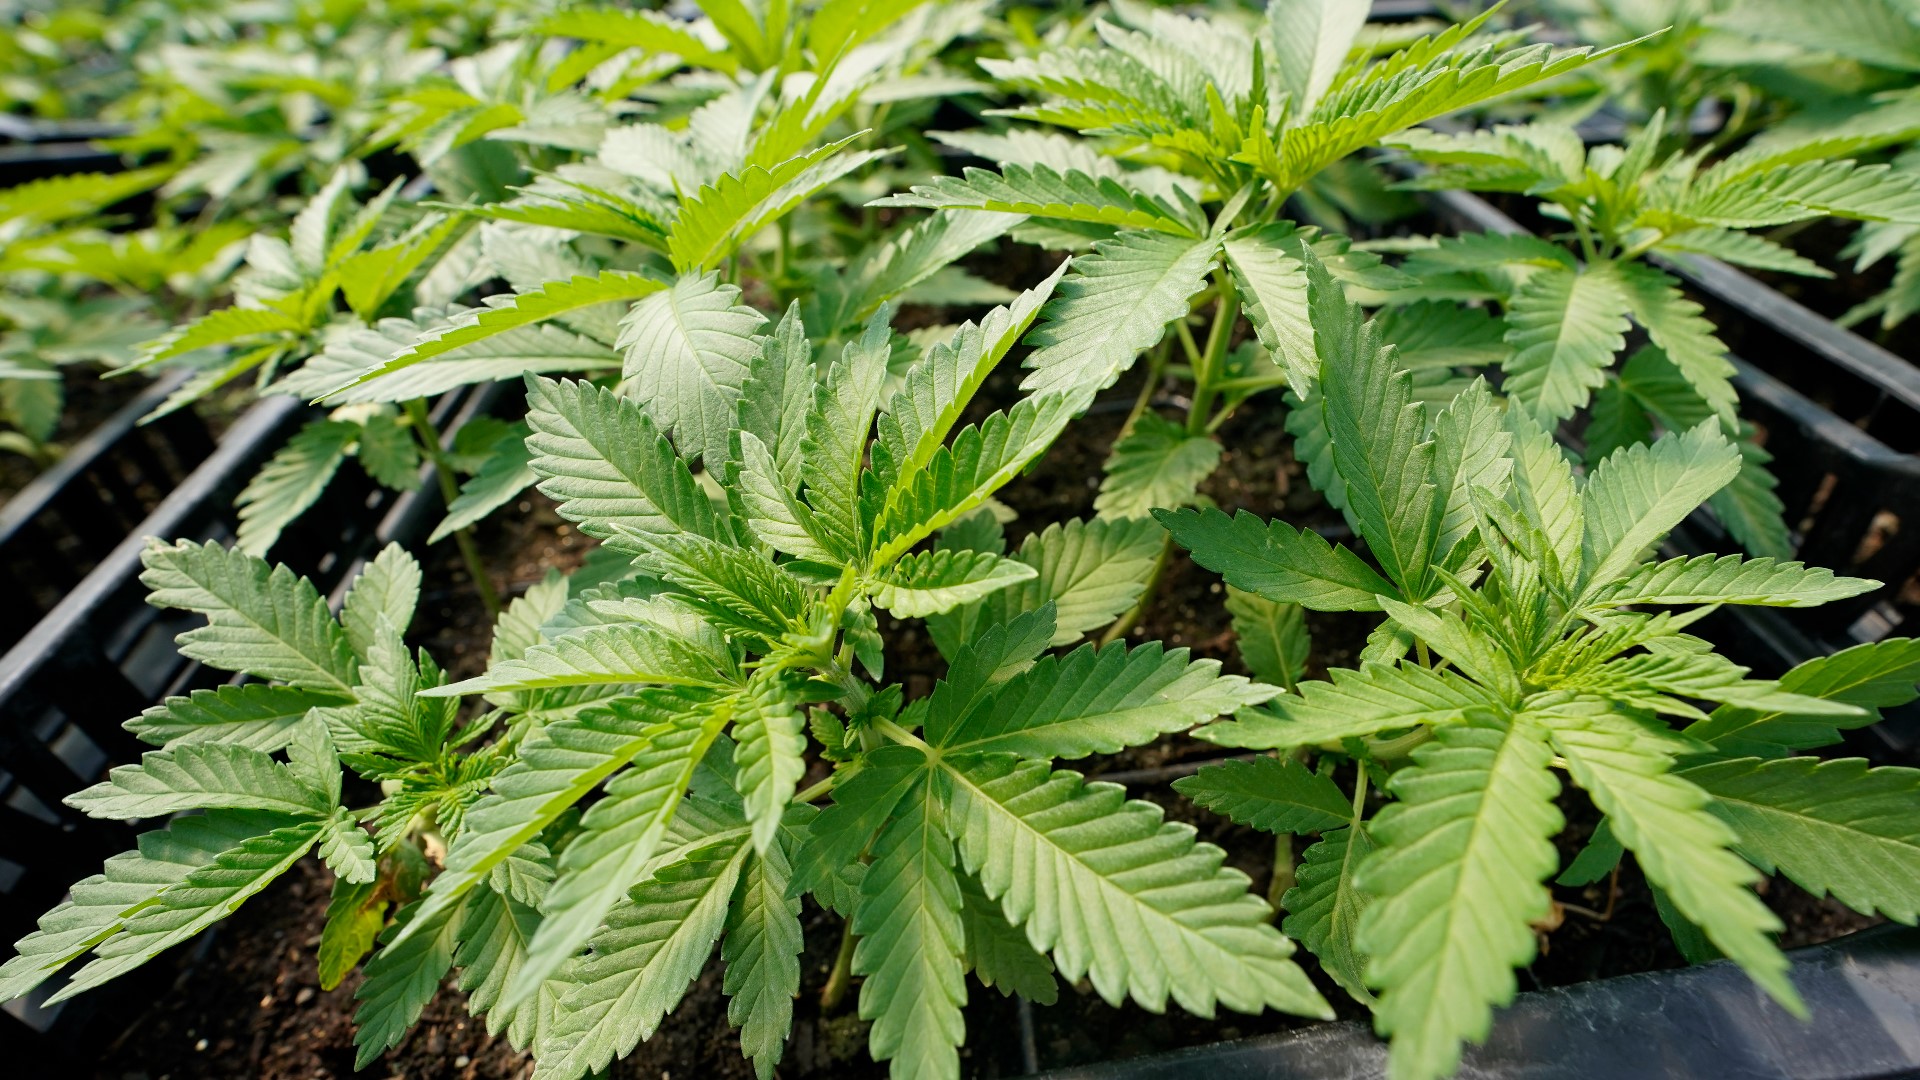 When will recreational marijuana be legal in Missouri?